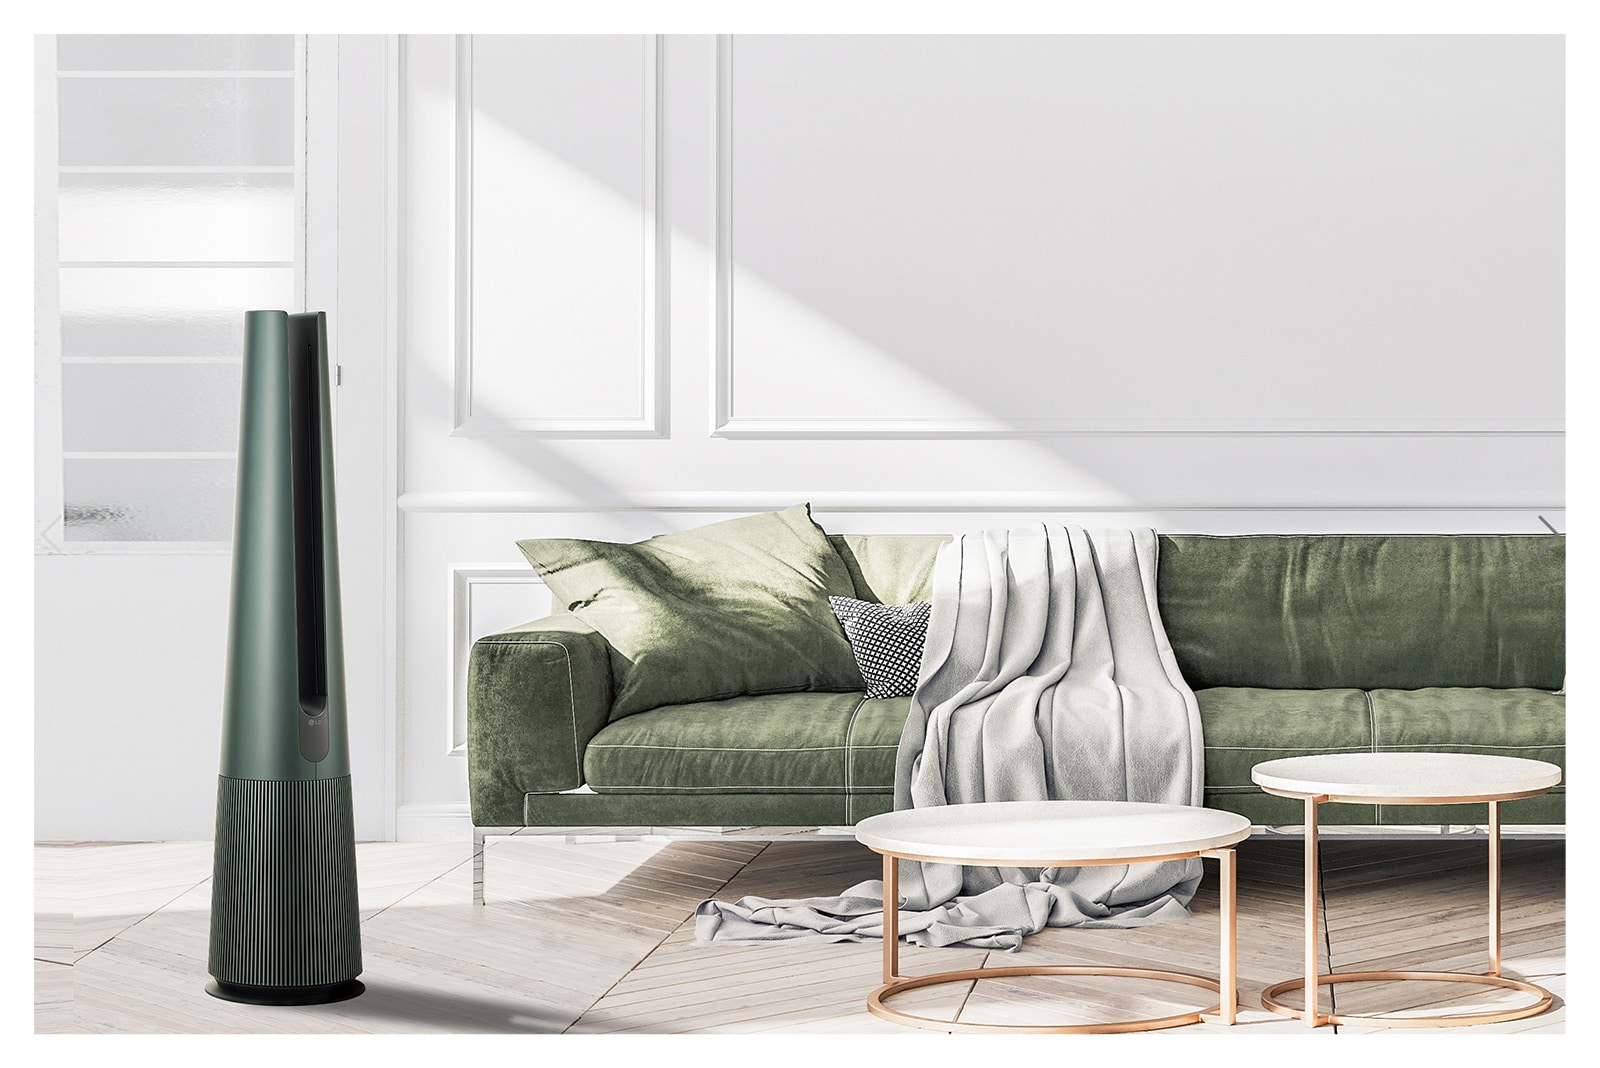 顯示自然綠的 LG AeroTower 風革機 Objet Collection 置於現代客廳中。